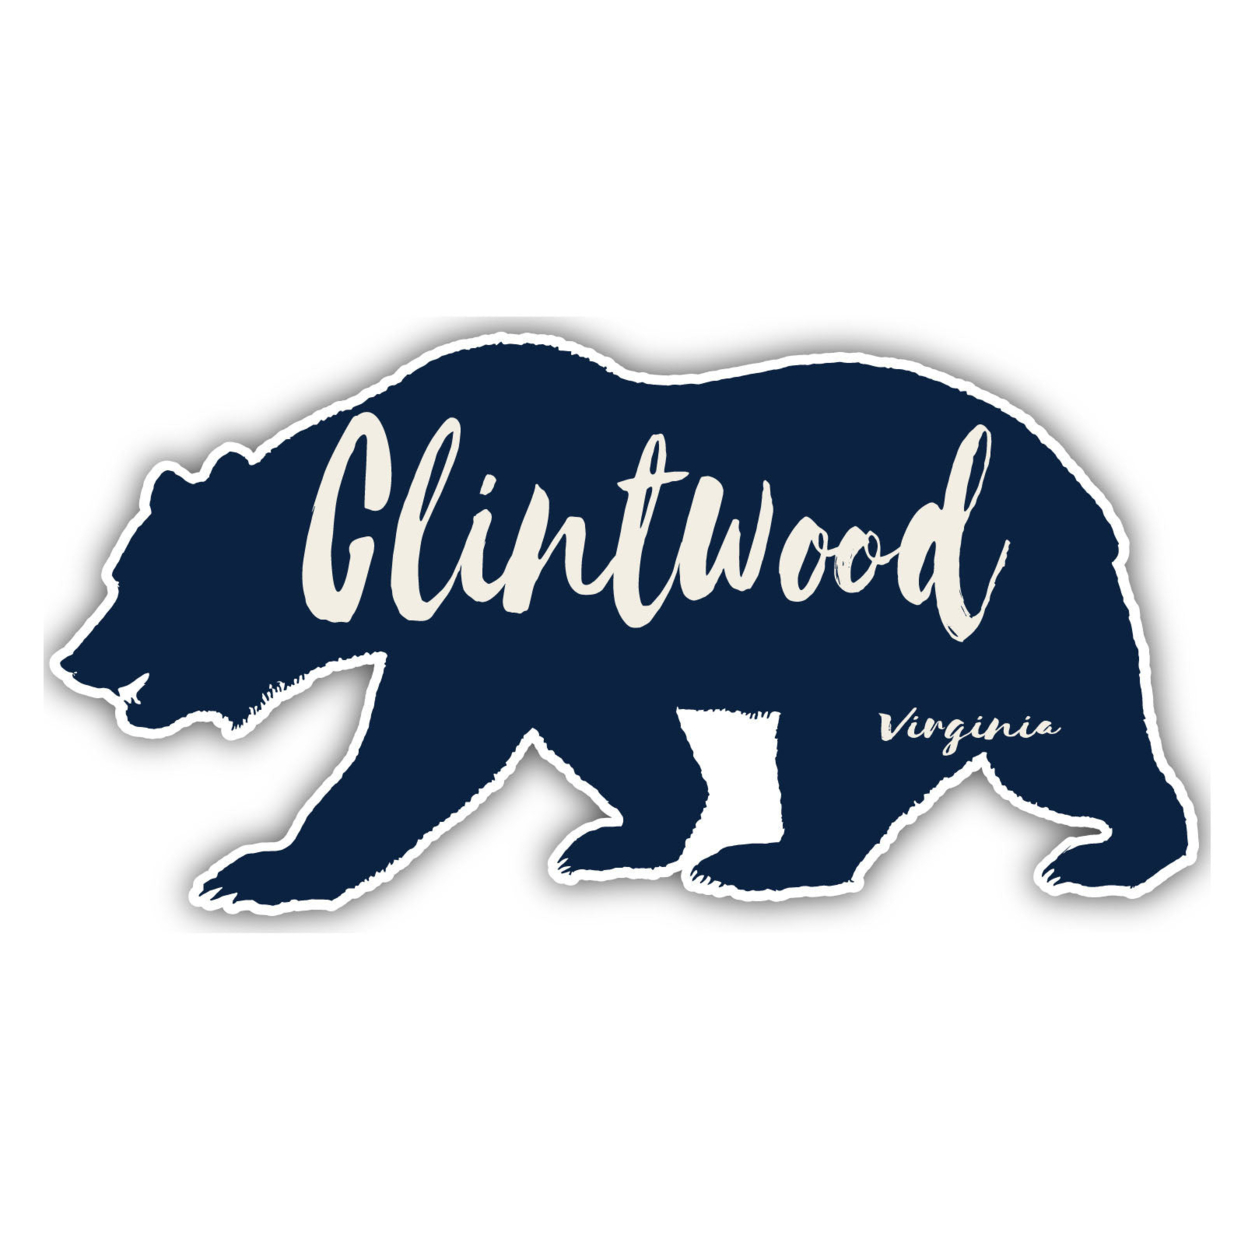 Clintwood Virginia Souvenir Decorative Stickers (Choose Theme And Size) - Single Unit, 6-Inch, Bear